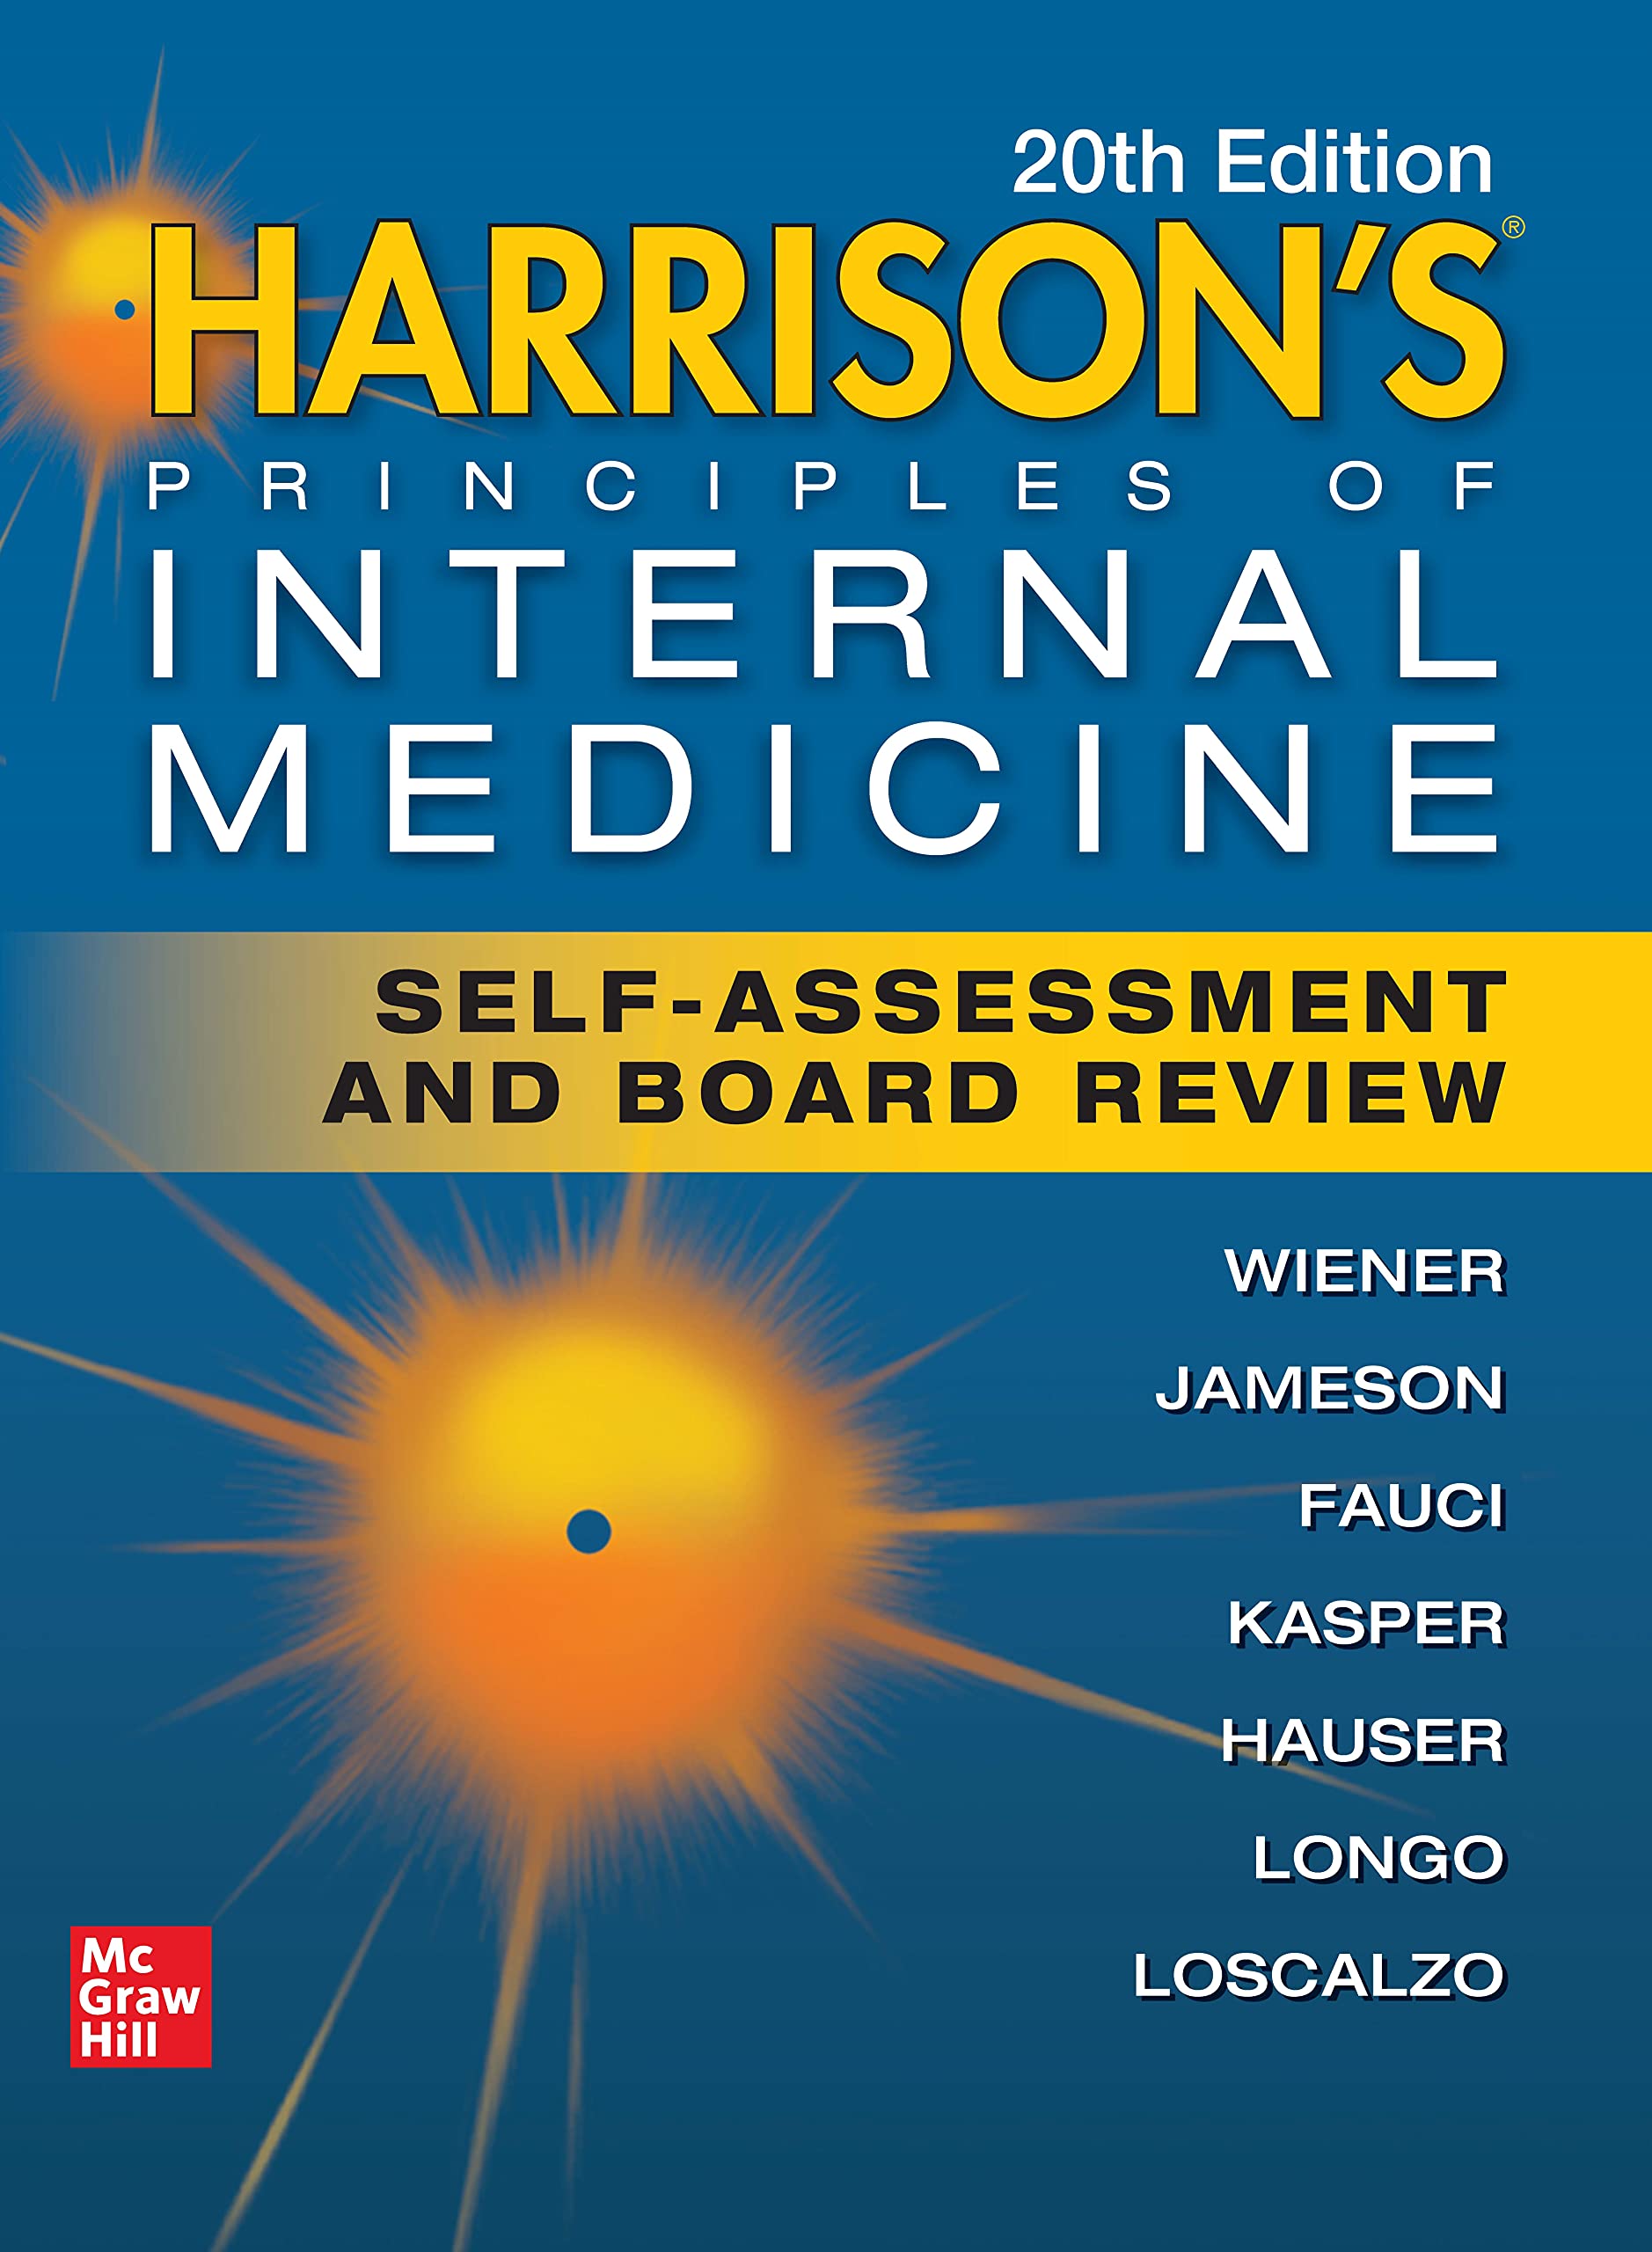 Harrison's Prnciples of Internal Medicine Self Assesment Board Review 20th International Edition 2022